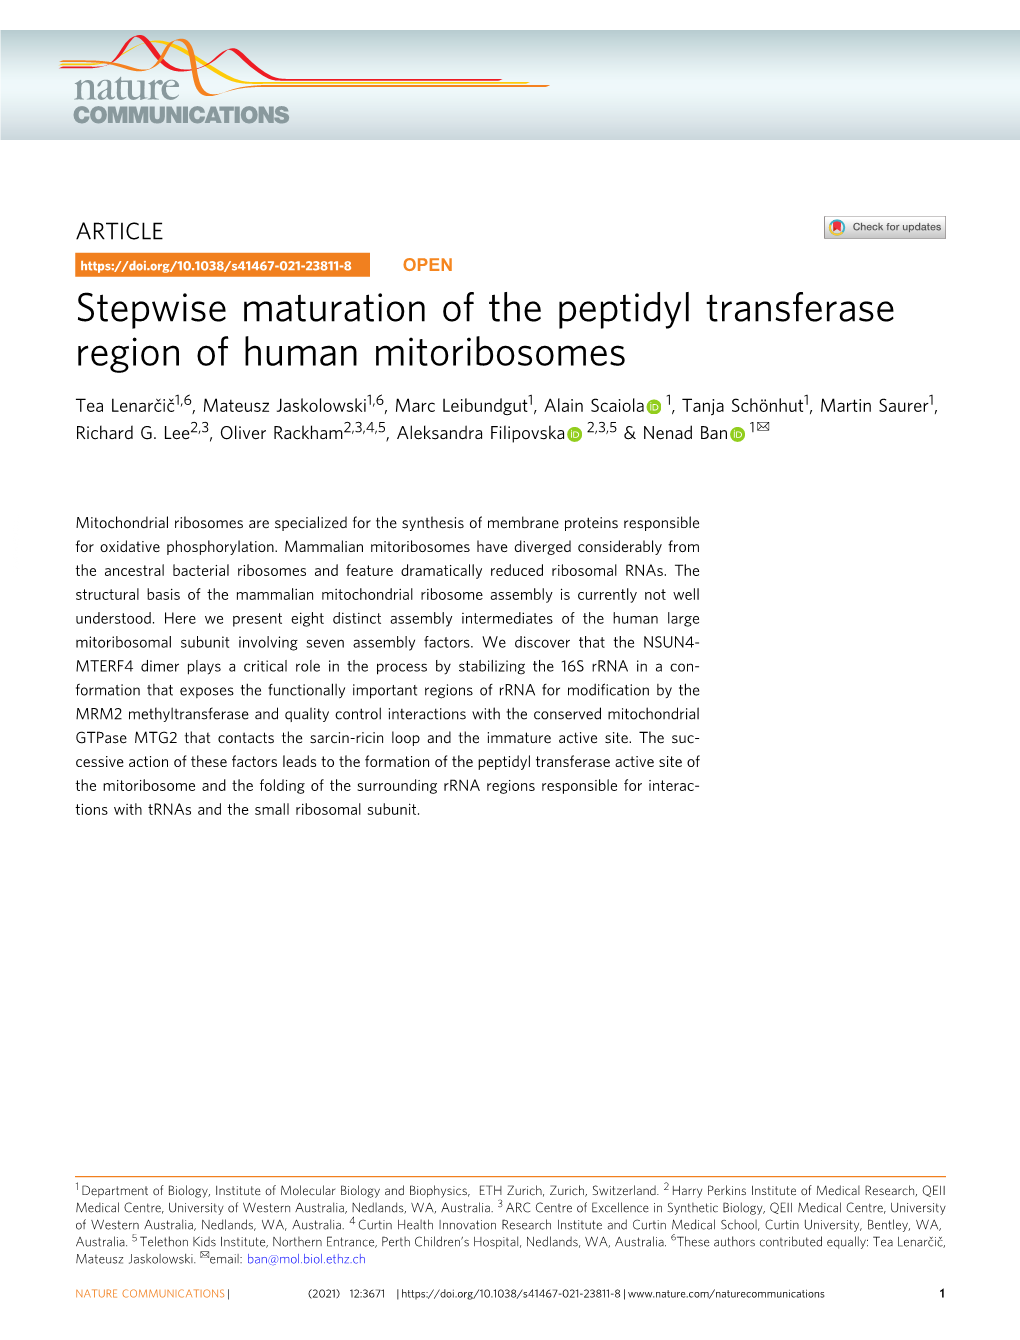 Stepwise Maturation of the Peptidyl Transferase Region of Human Mitoribosomes